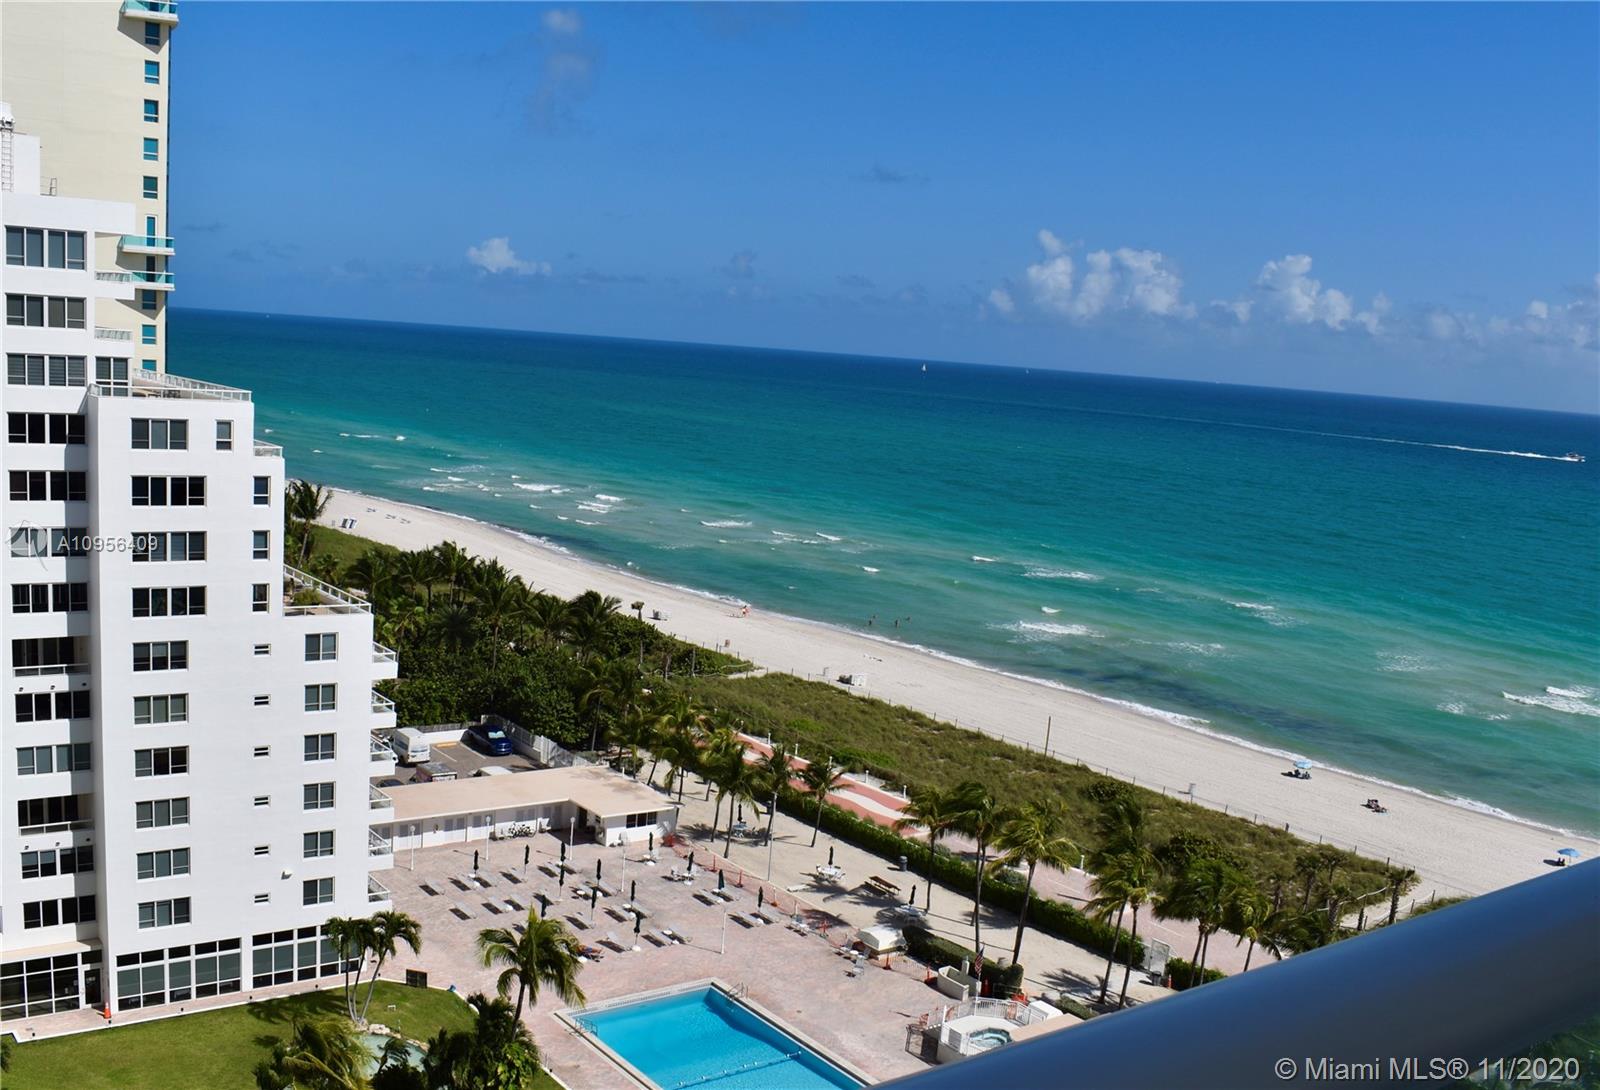 Carriage Club South Unit #14F Condo for Sale in Mid-Beach - Miami Beach